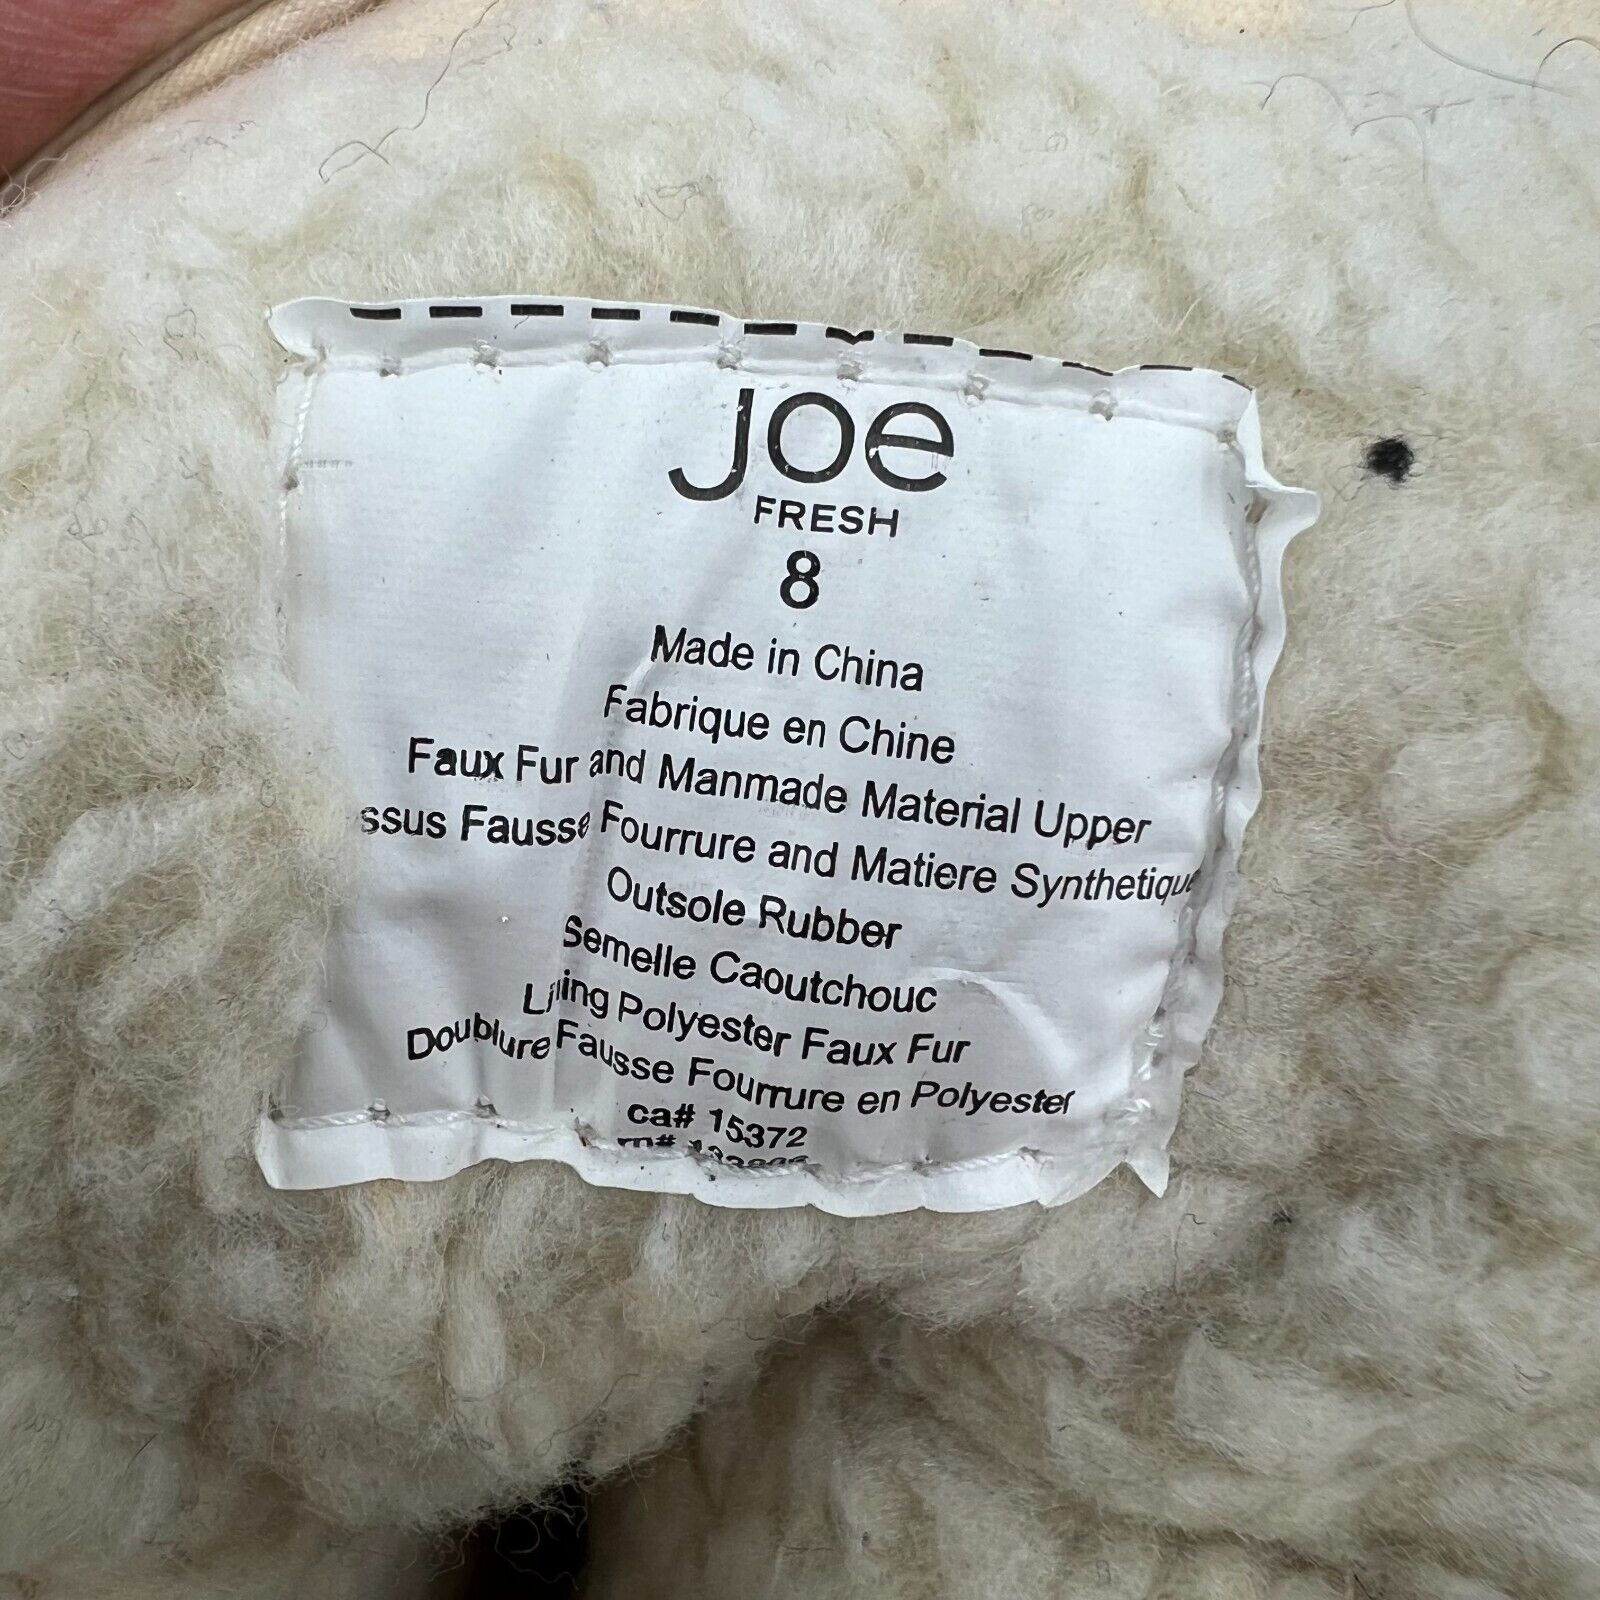 Joe Fresh Faux Fur Boots Rubber Soles Winter Waterproof No Laces Womens Size 8